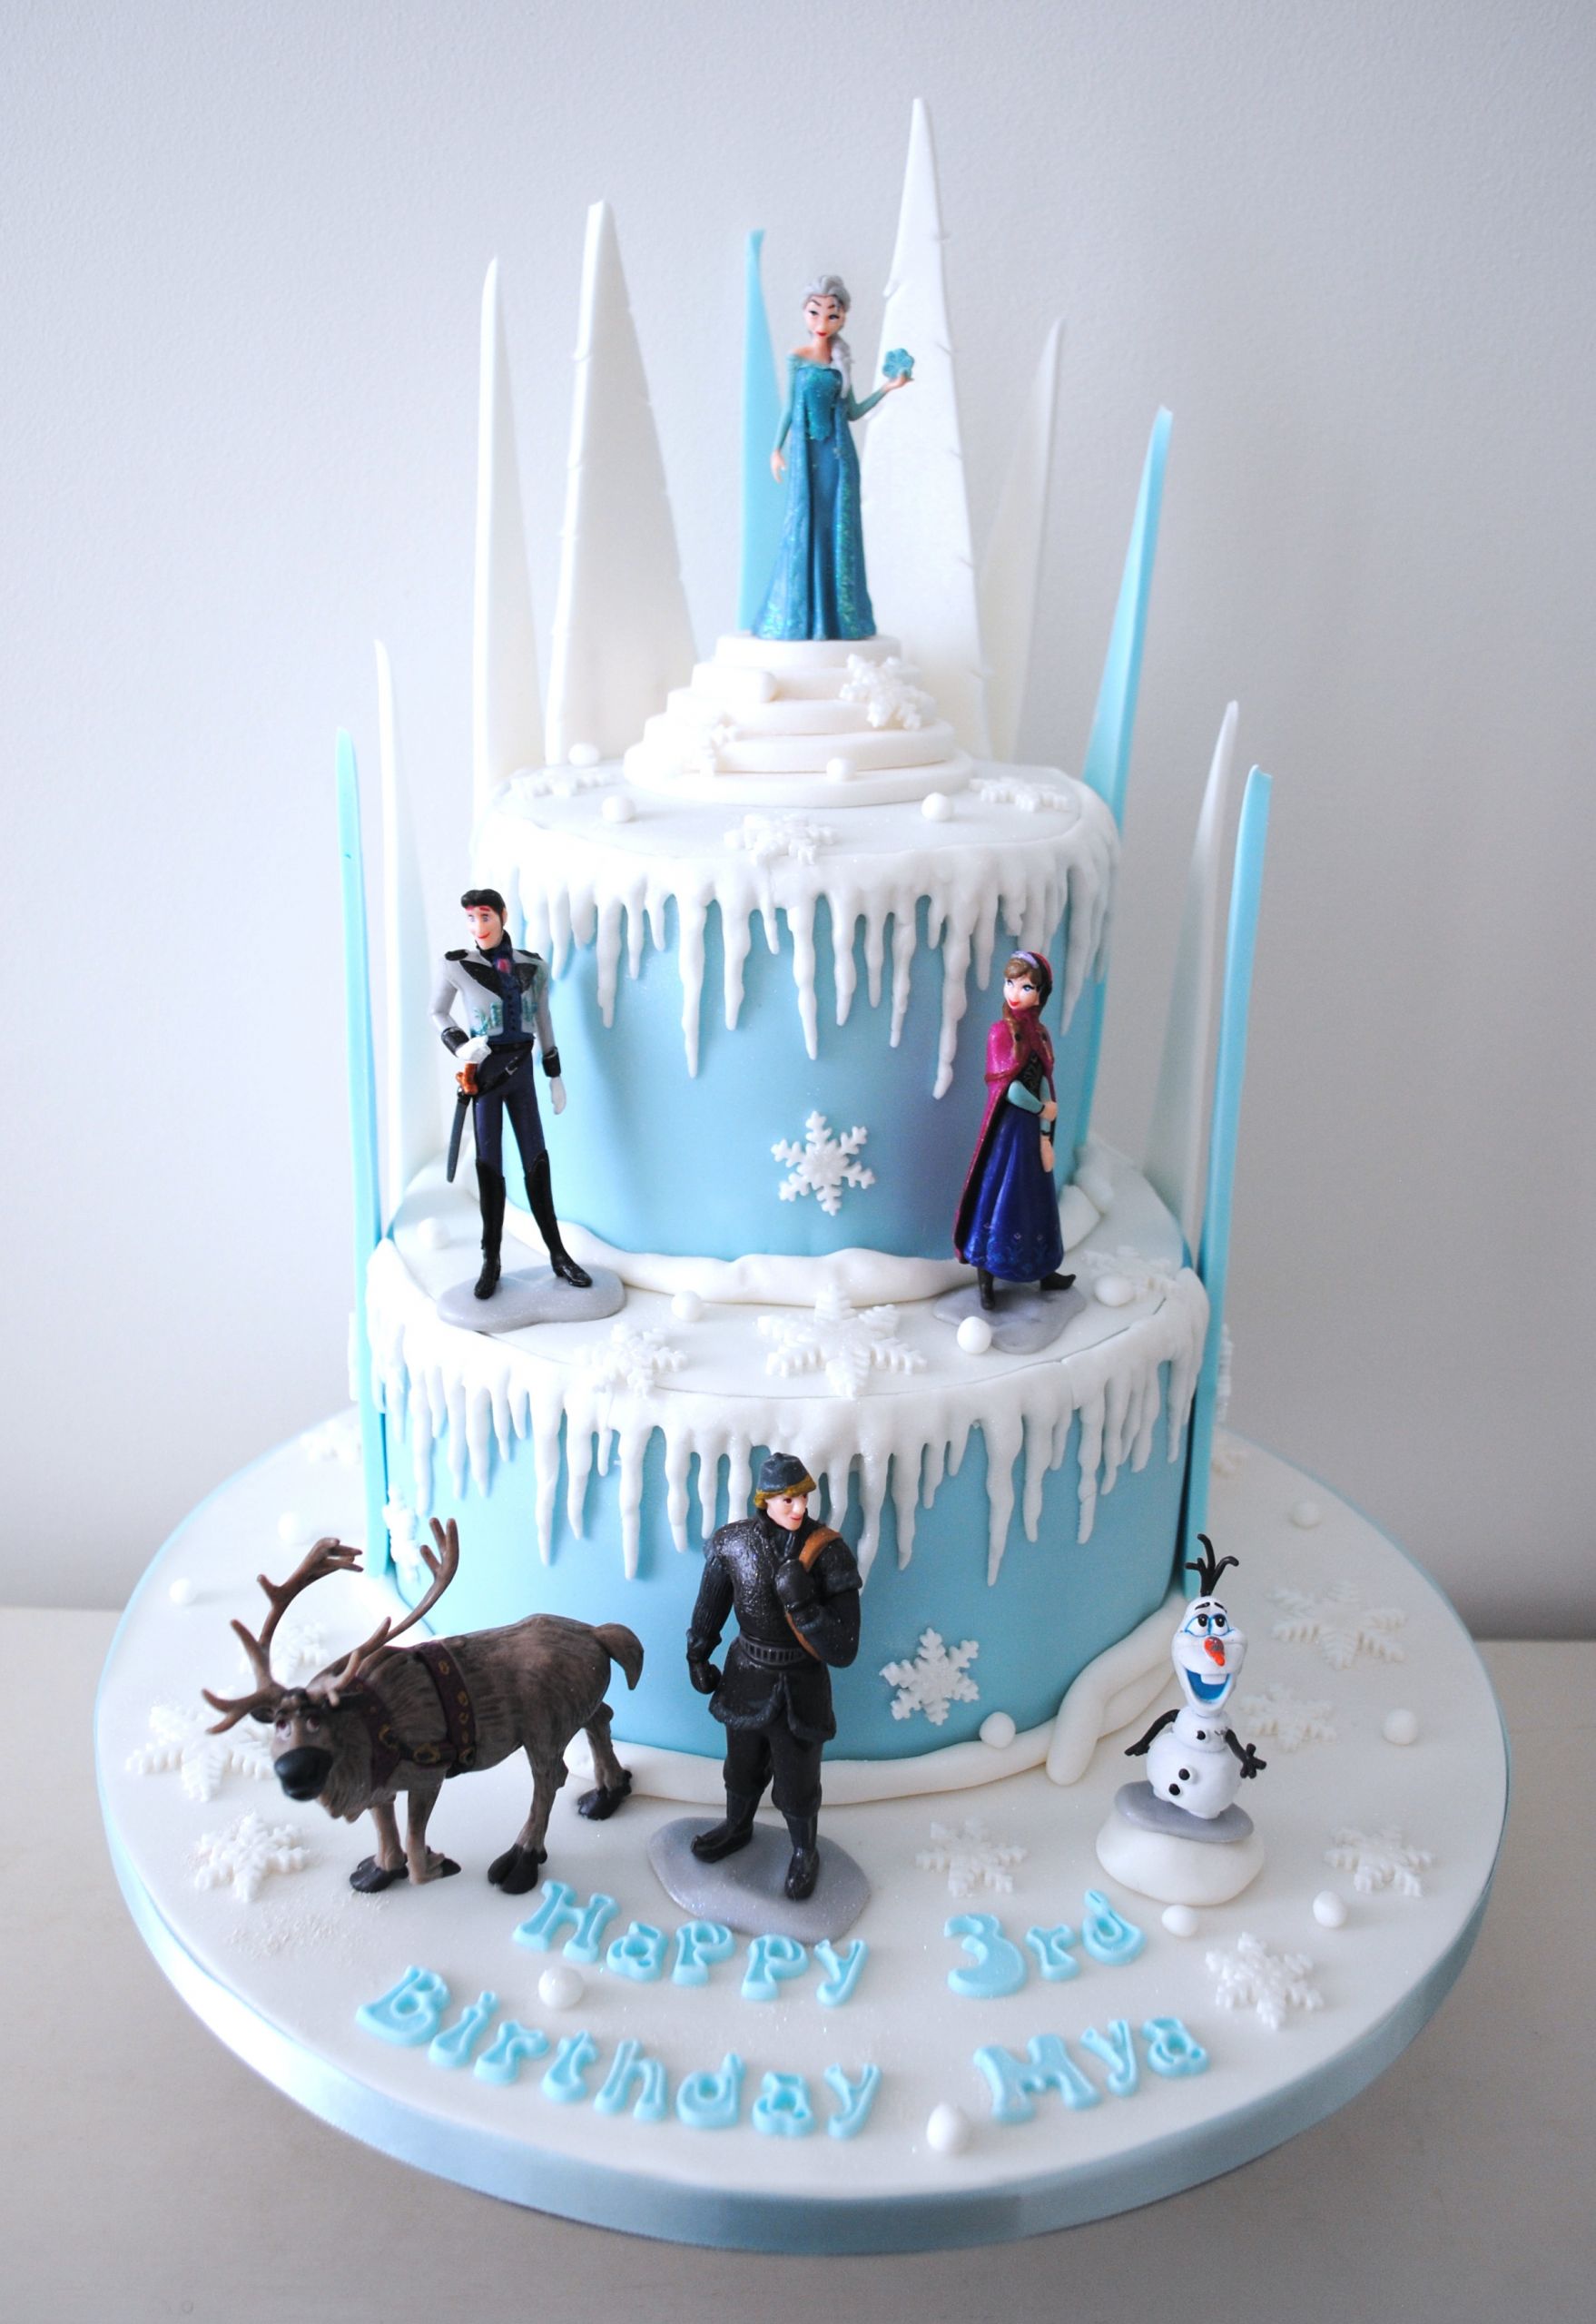 Disney Frozen Birthday Cakes
 tagged "celebration cakes"